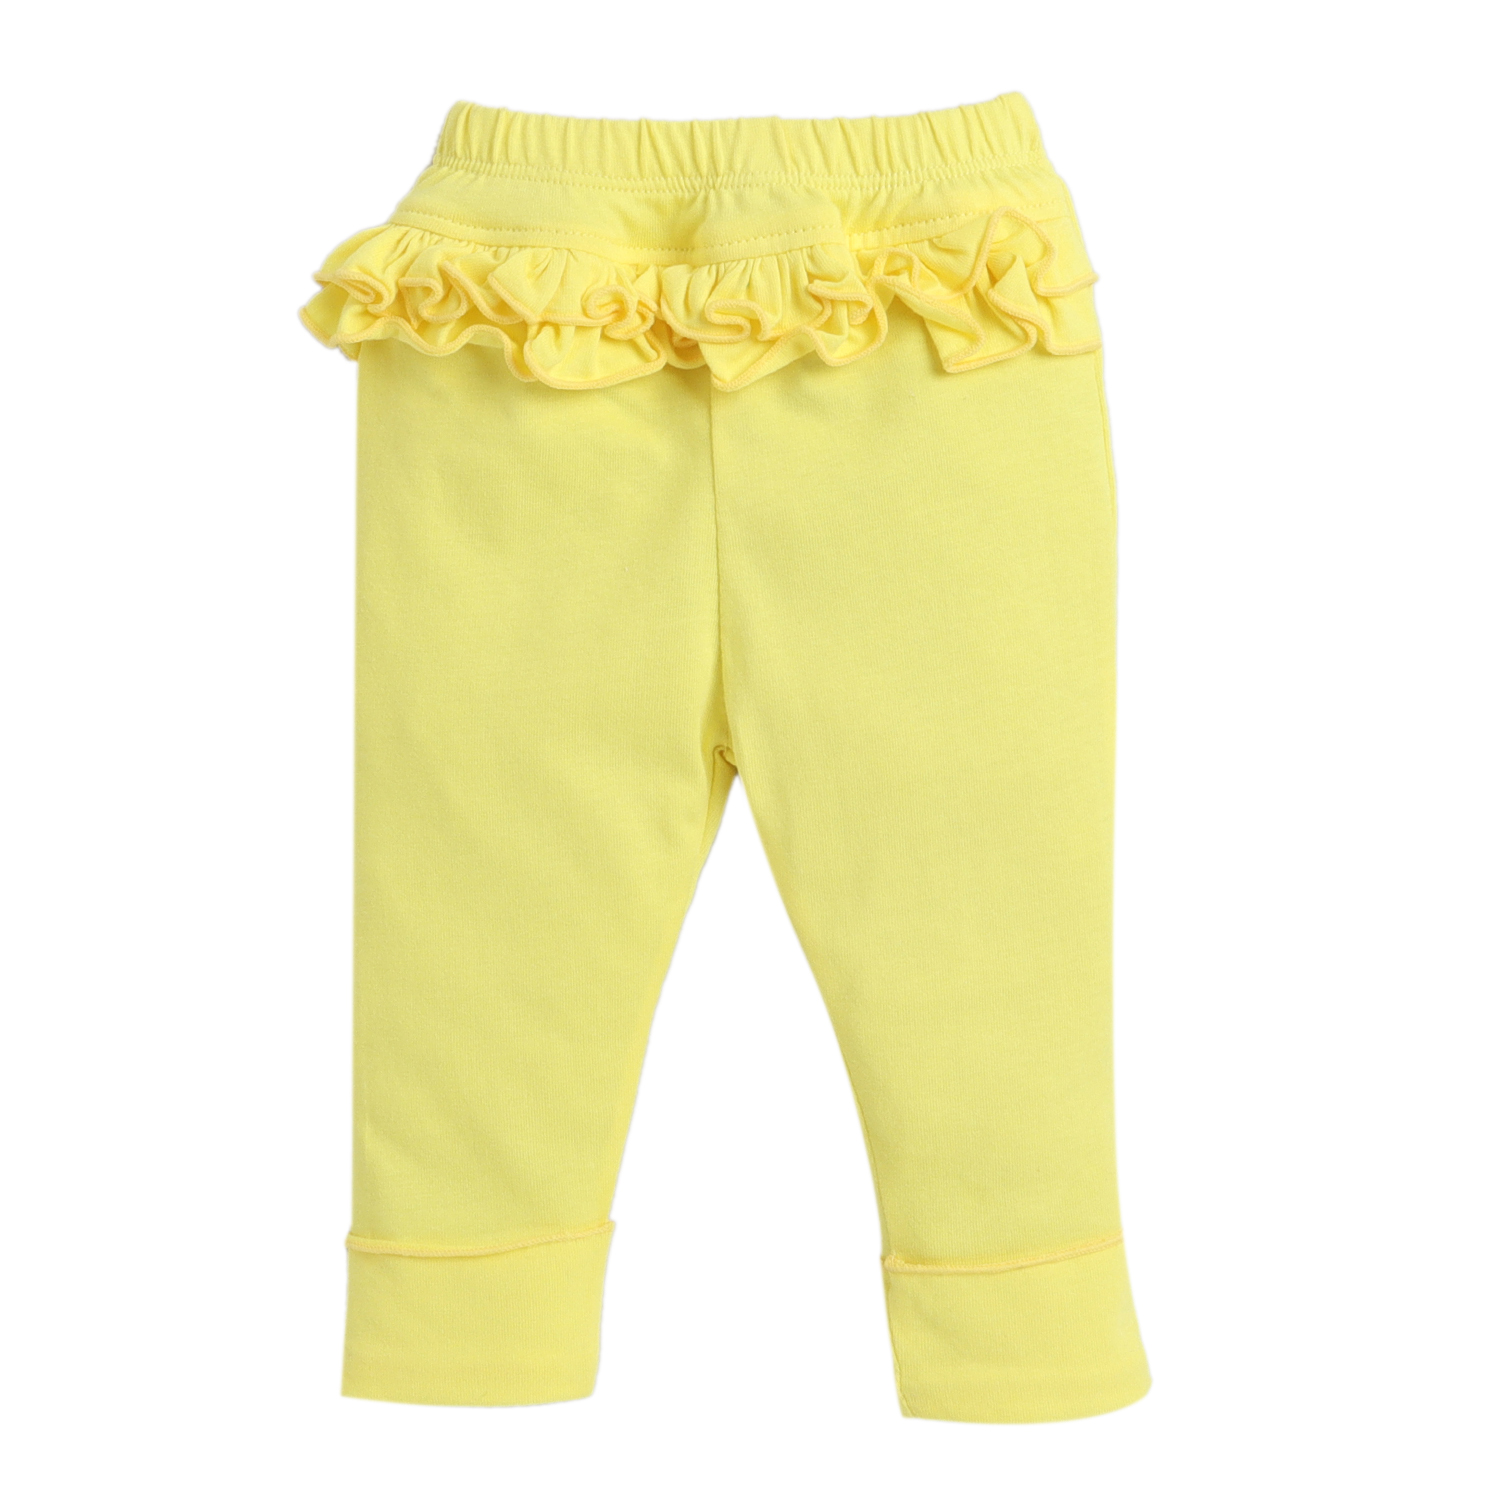 Girls' Lemon Yellow Color Pants - Lively and Stylish Wardrobe Addition  cotton pants for women women pants